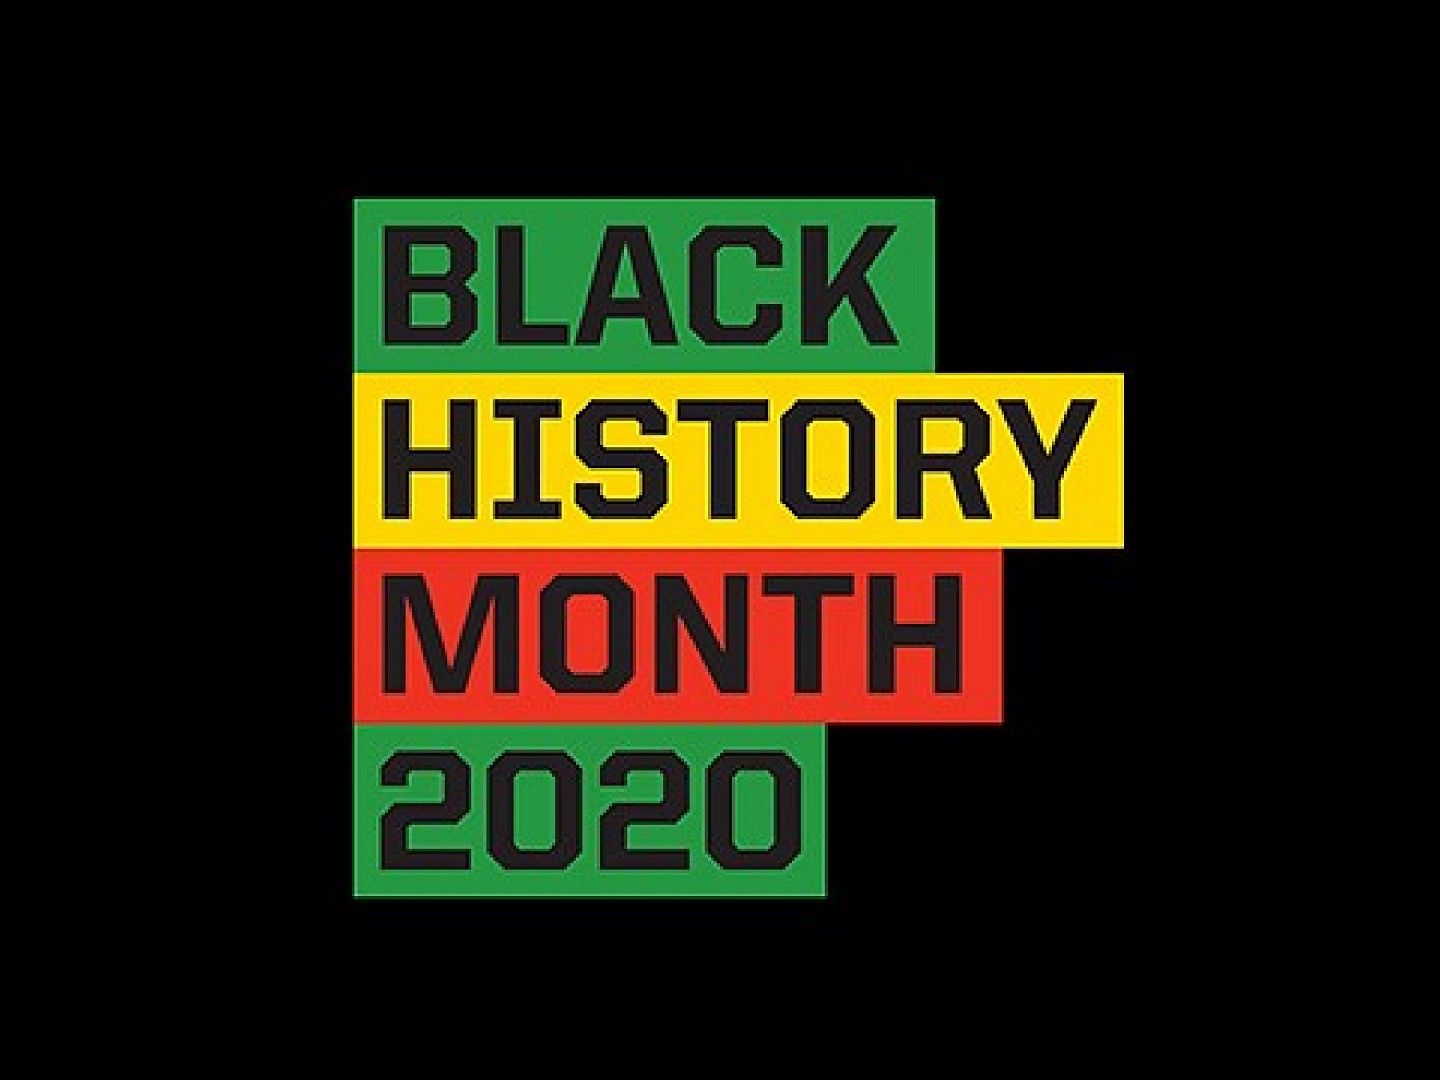 Black History Month 2020